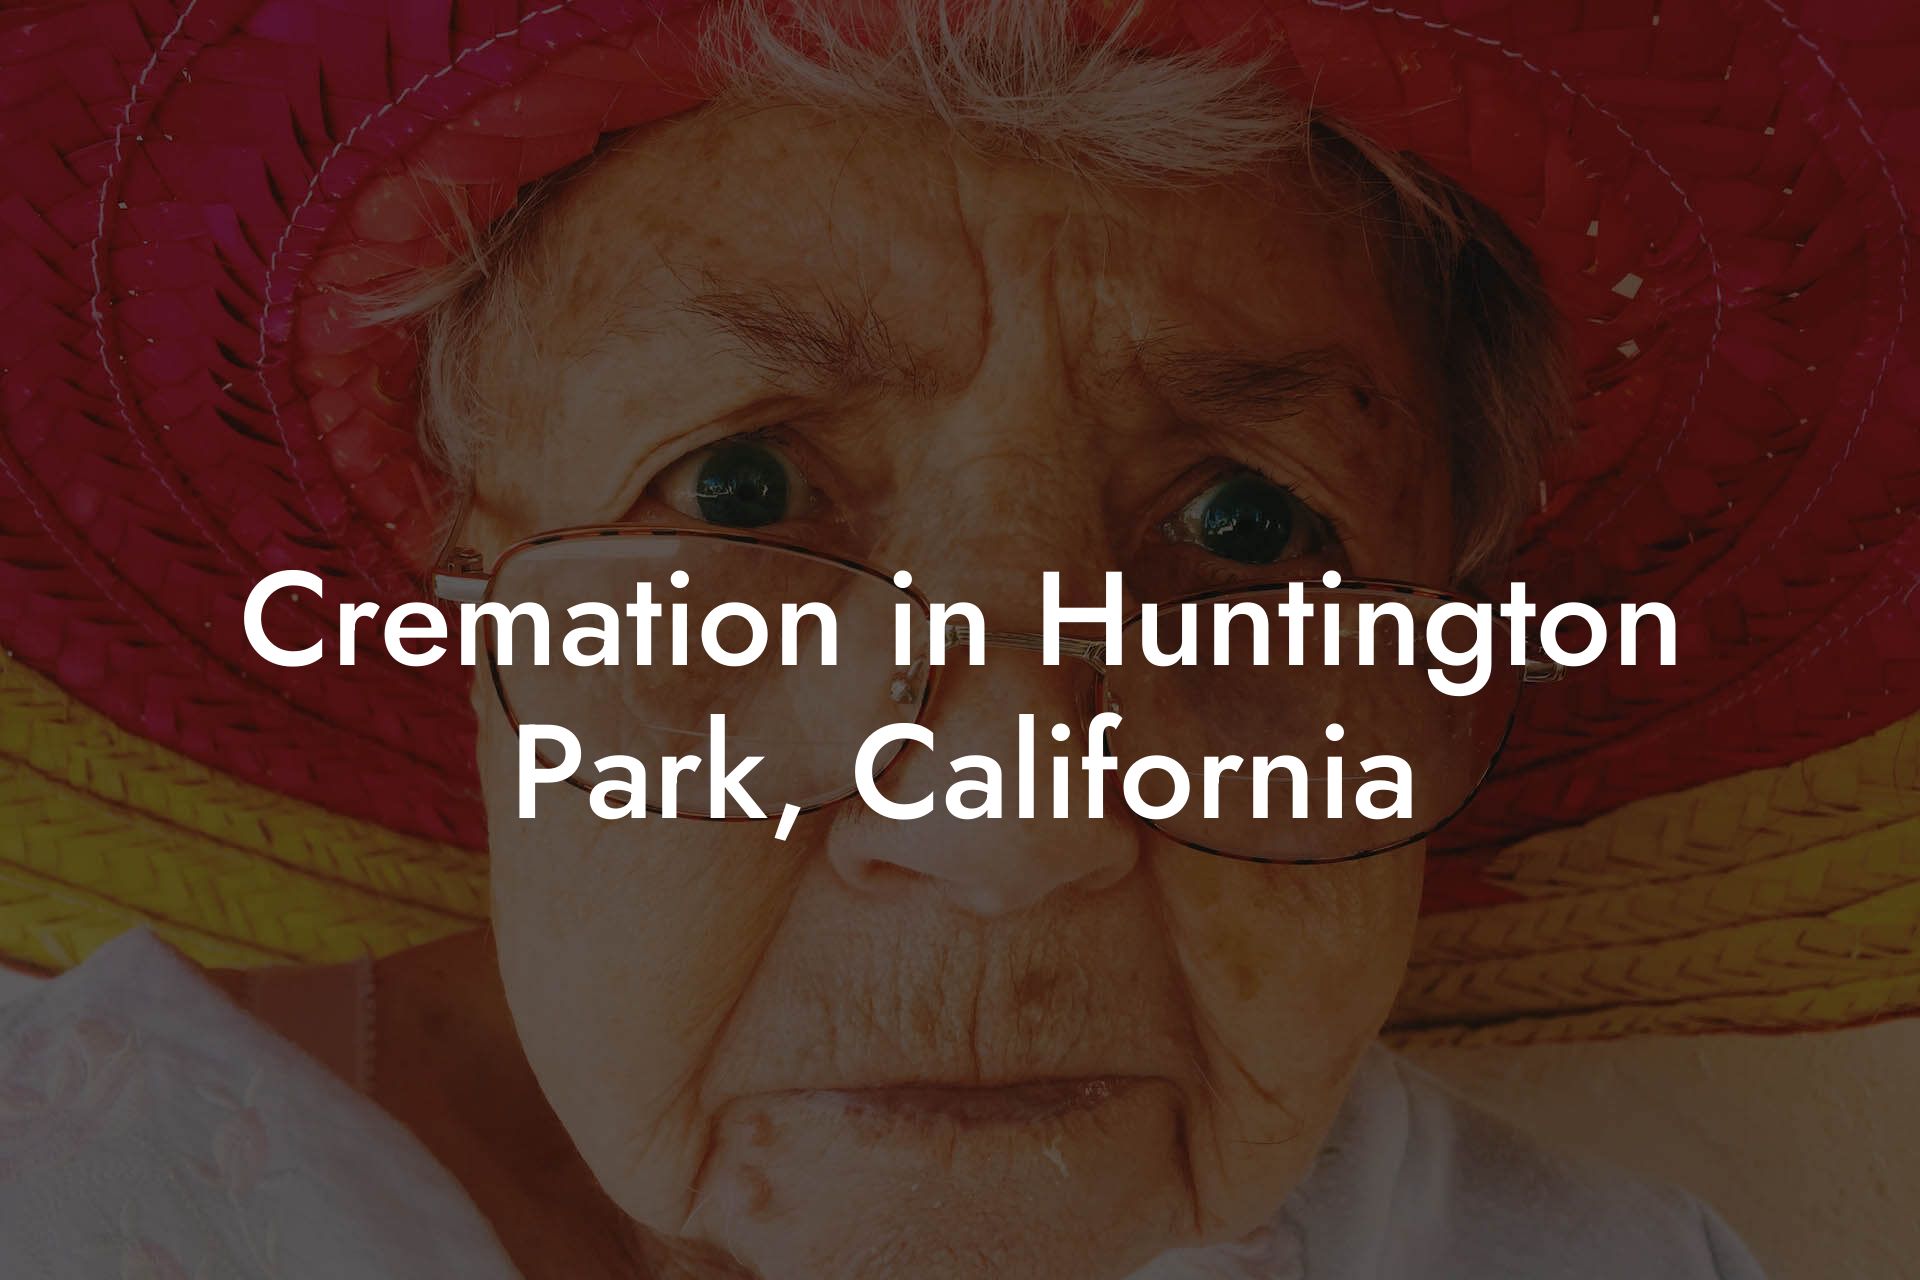 Cremation in Huntington Park, California